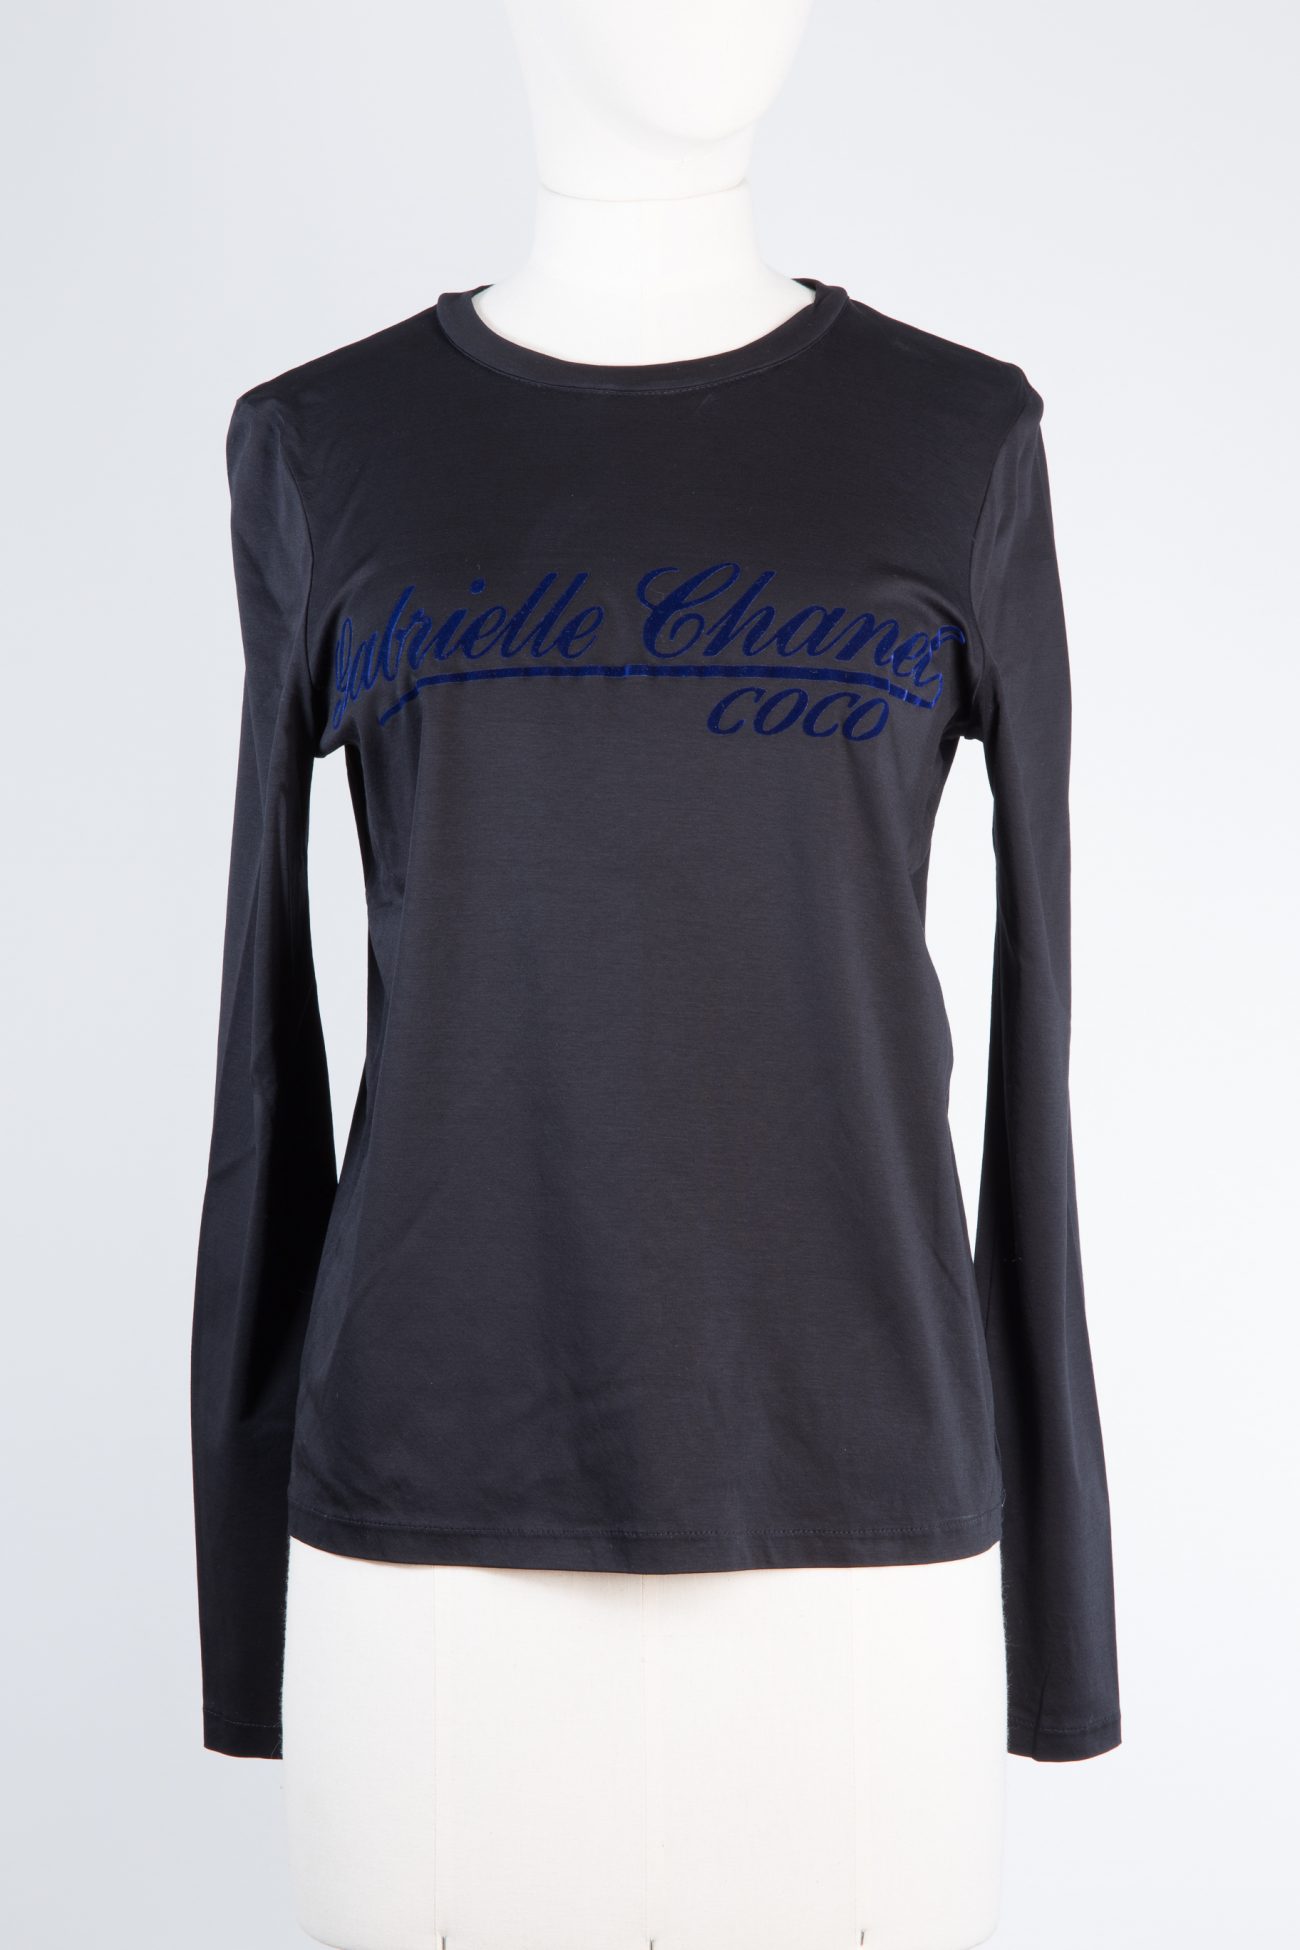 Chanel long-sleeve top